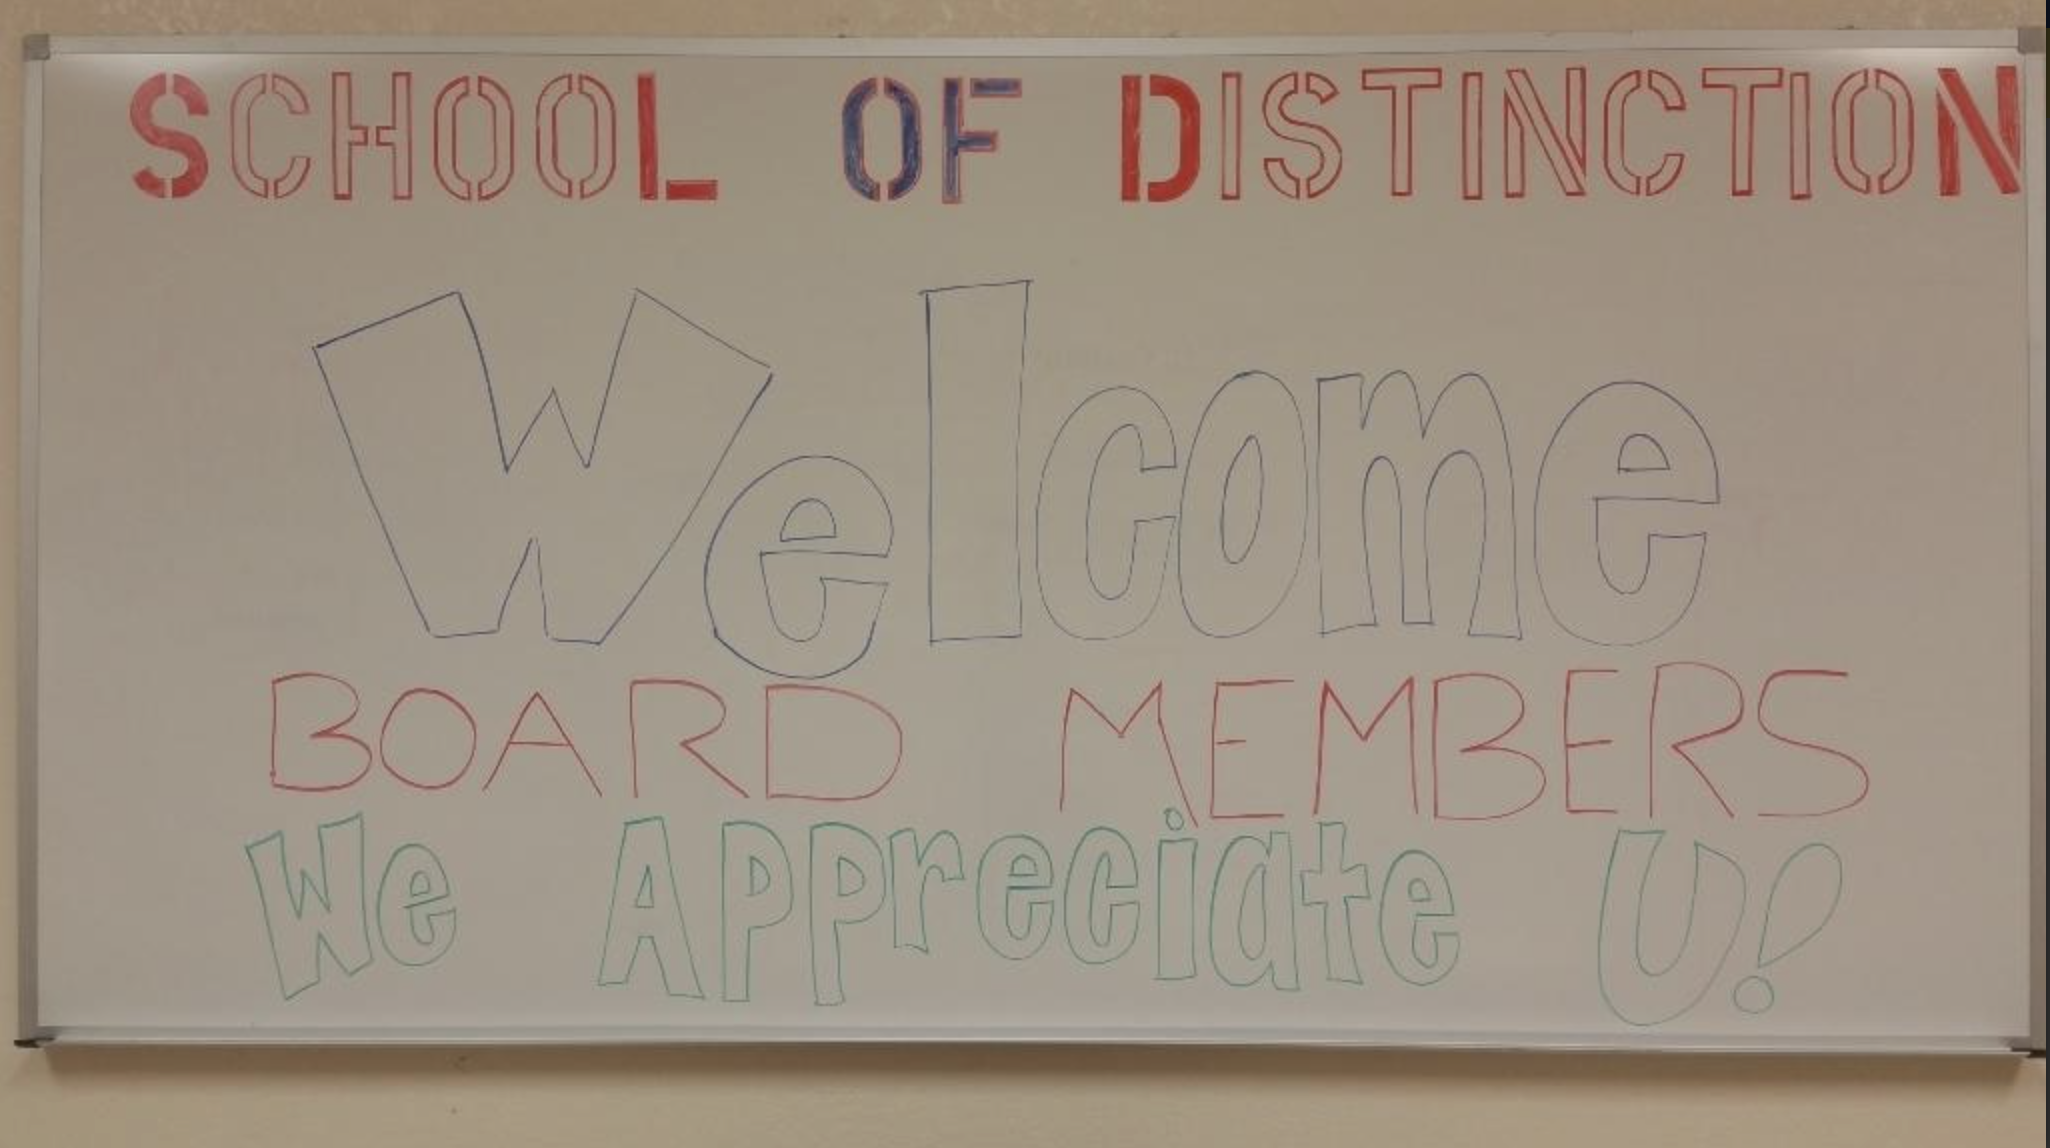 school of distinction. welcome board members. we appreciate you.